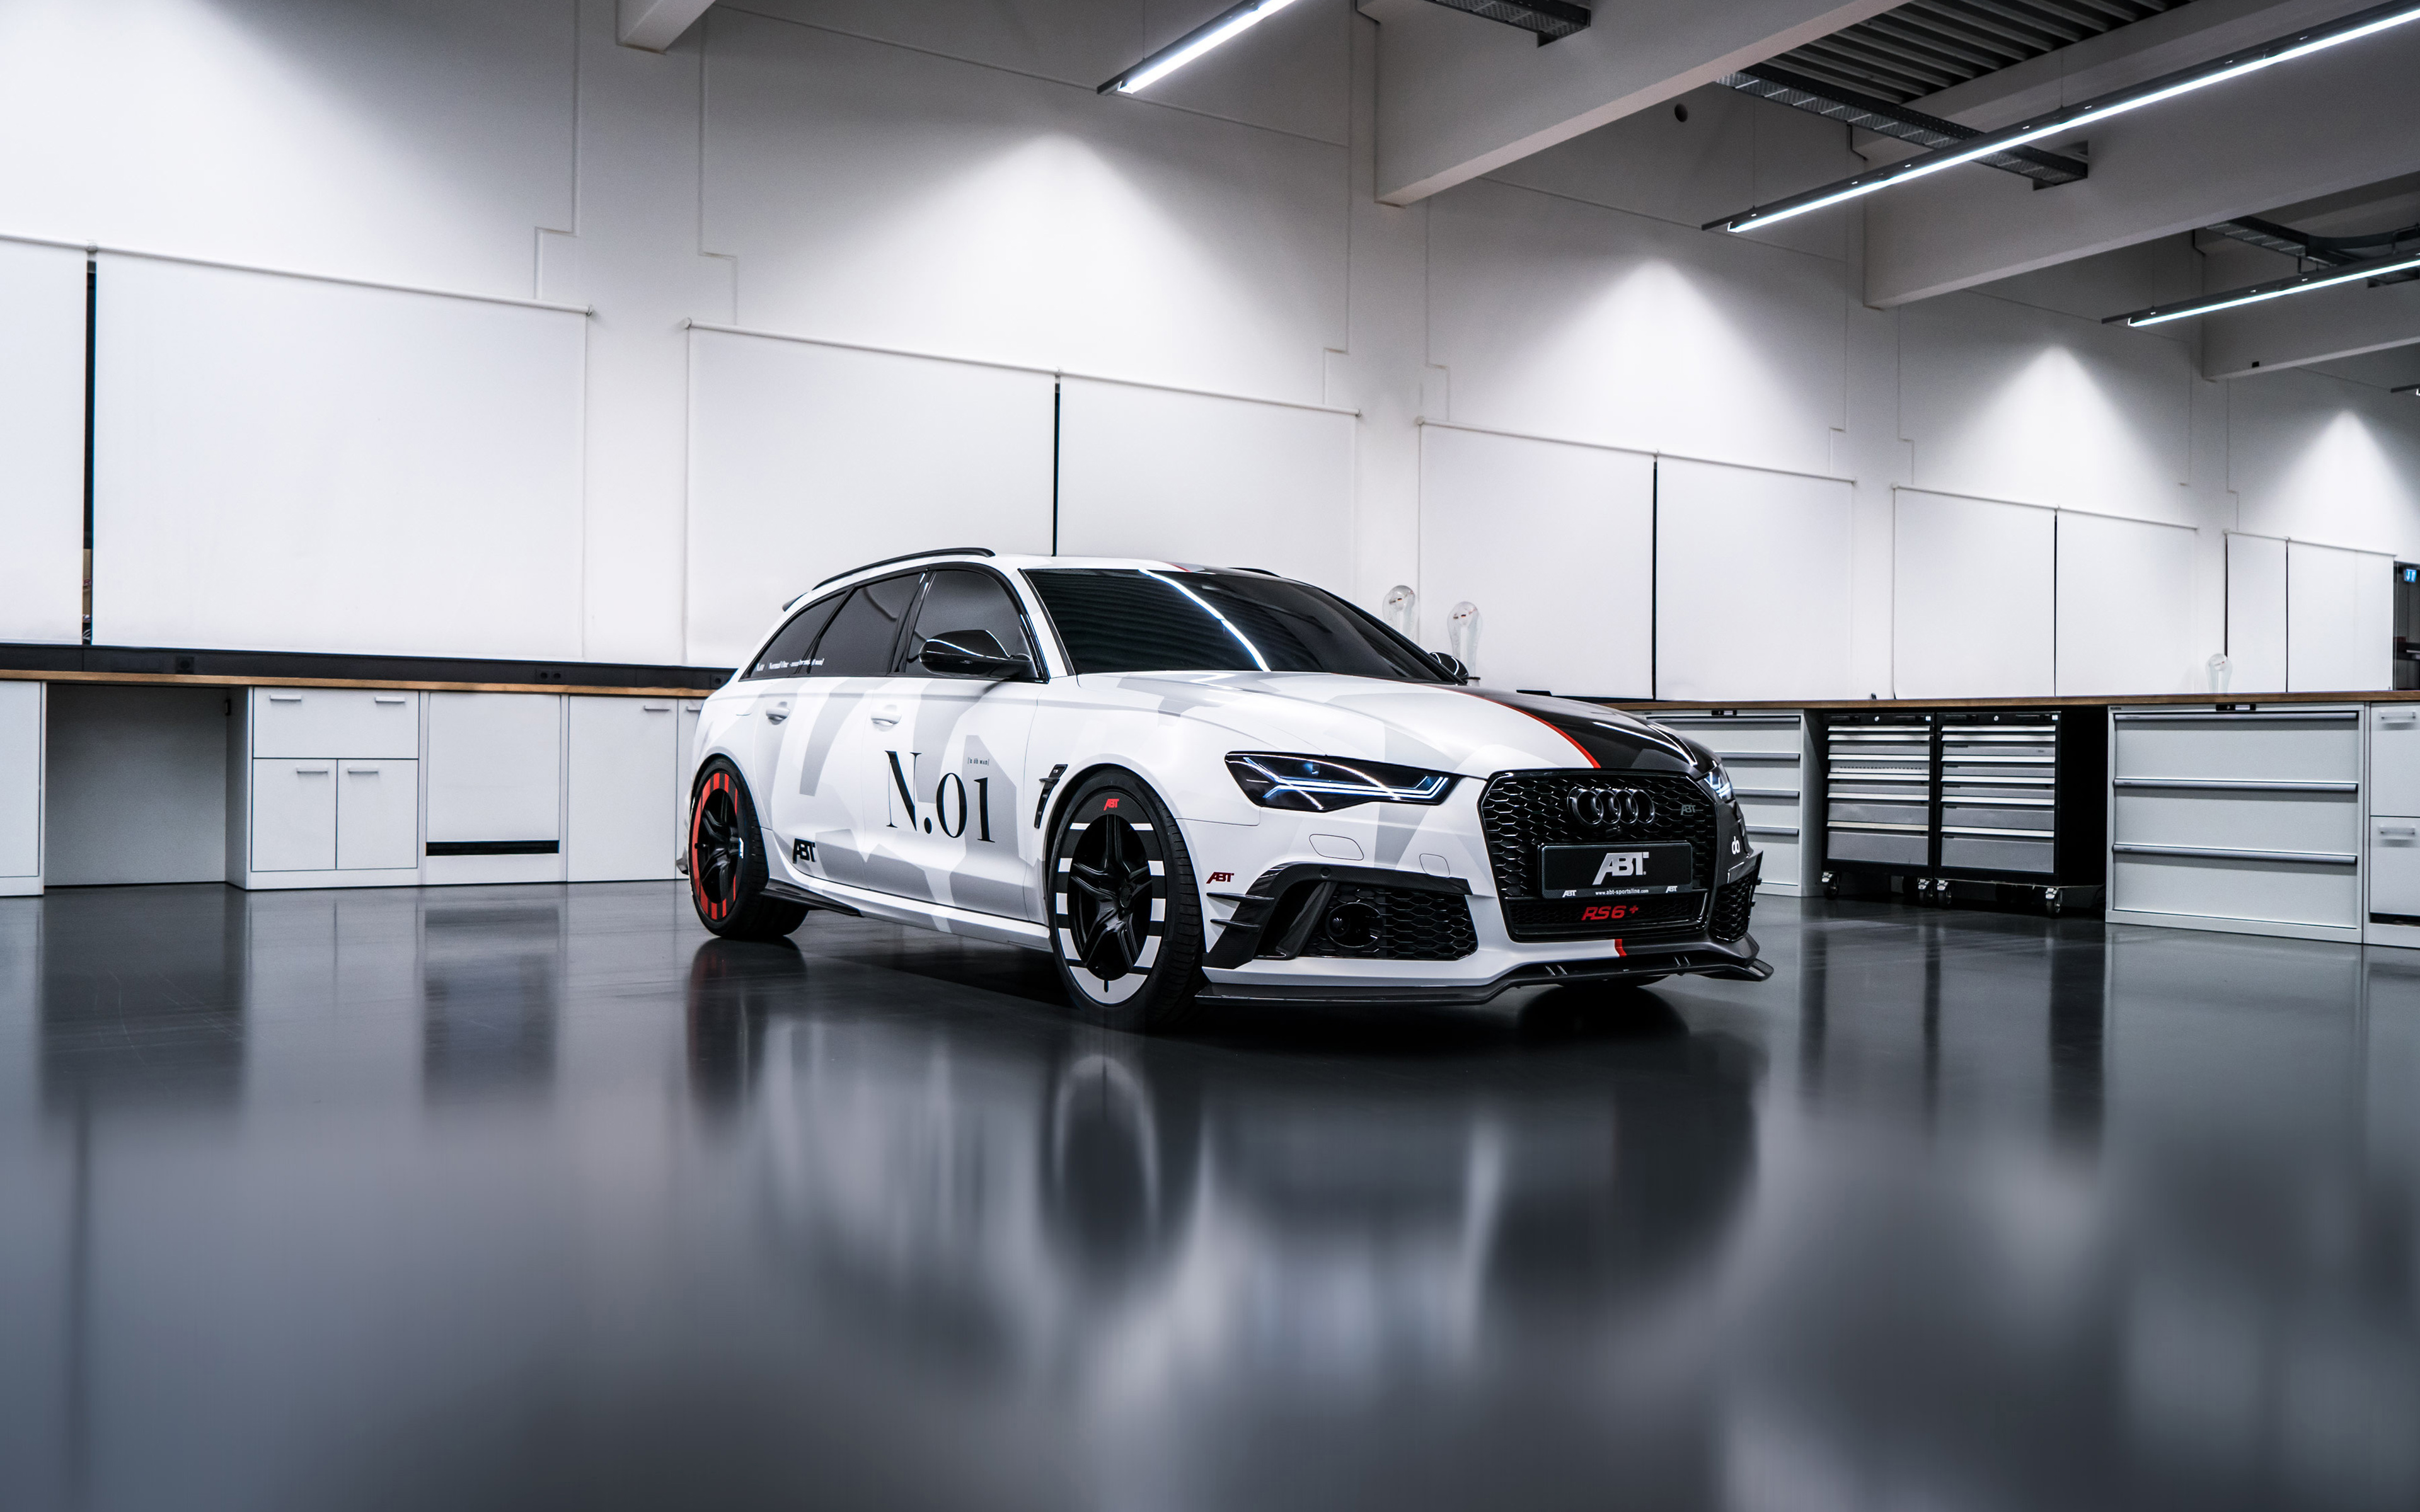 4k, Audi Rs6 Avant, Tuning, 2018 Cars, Garage, Abt, - Rs6 Abt Jon Olsson , HD Wallpaper & Backgrounds